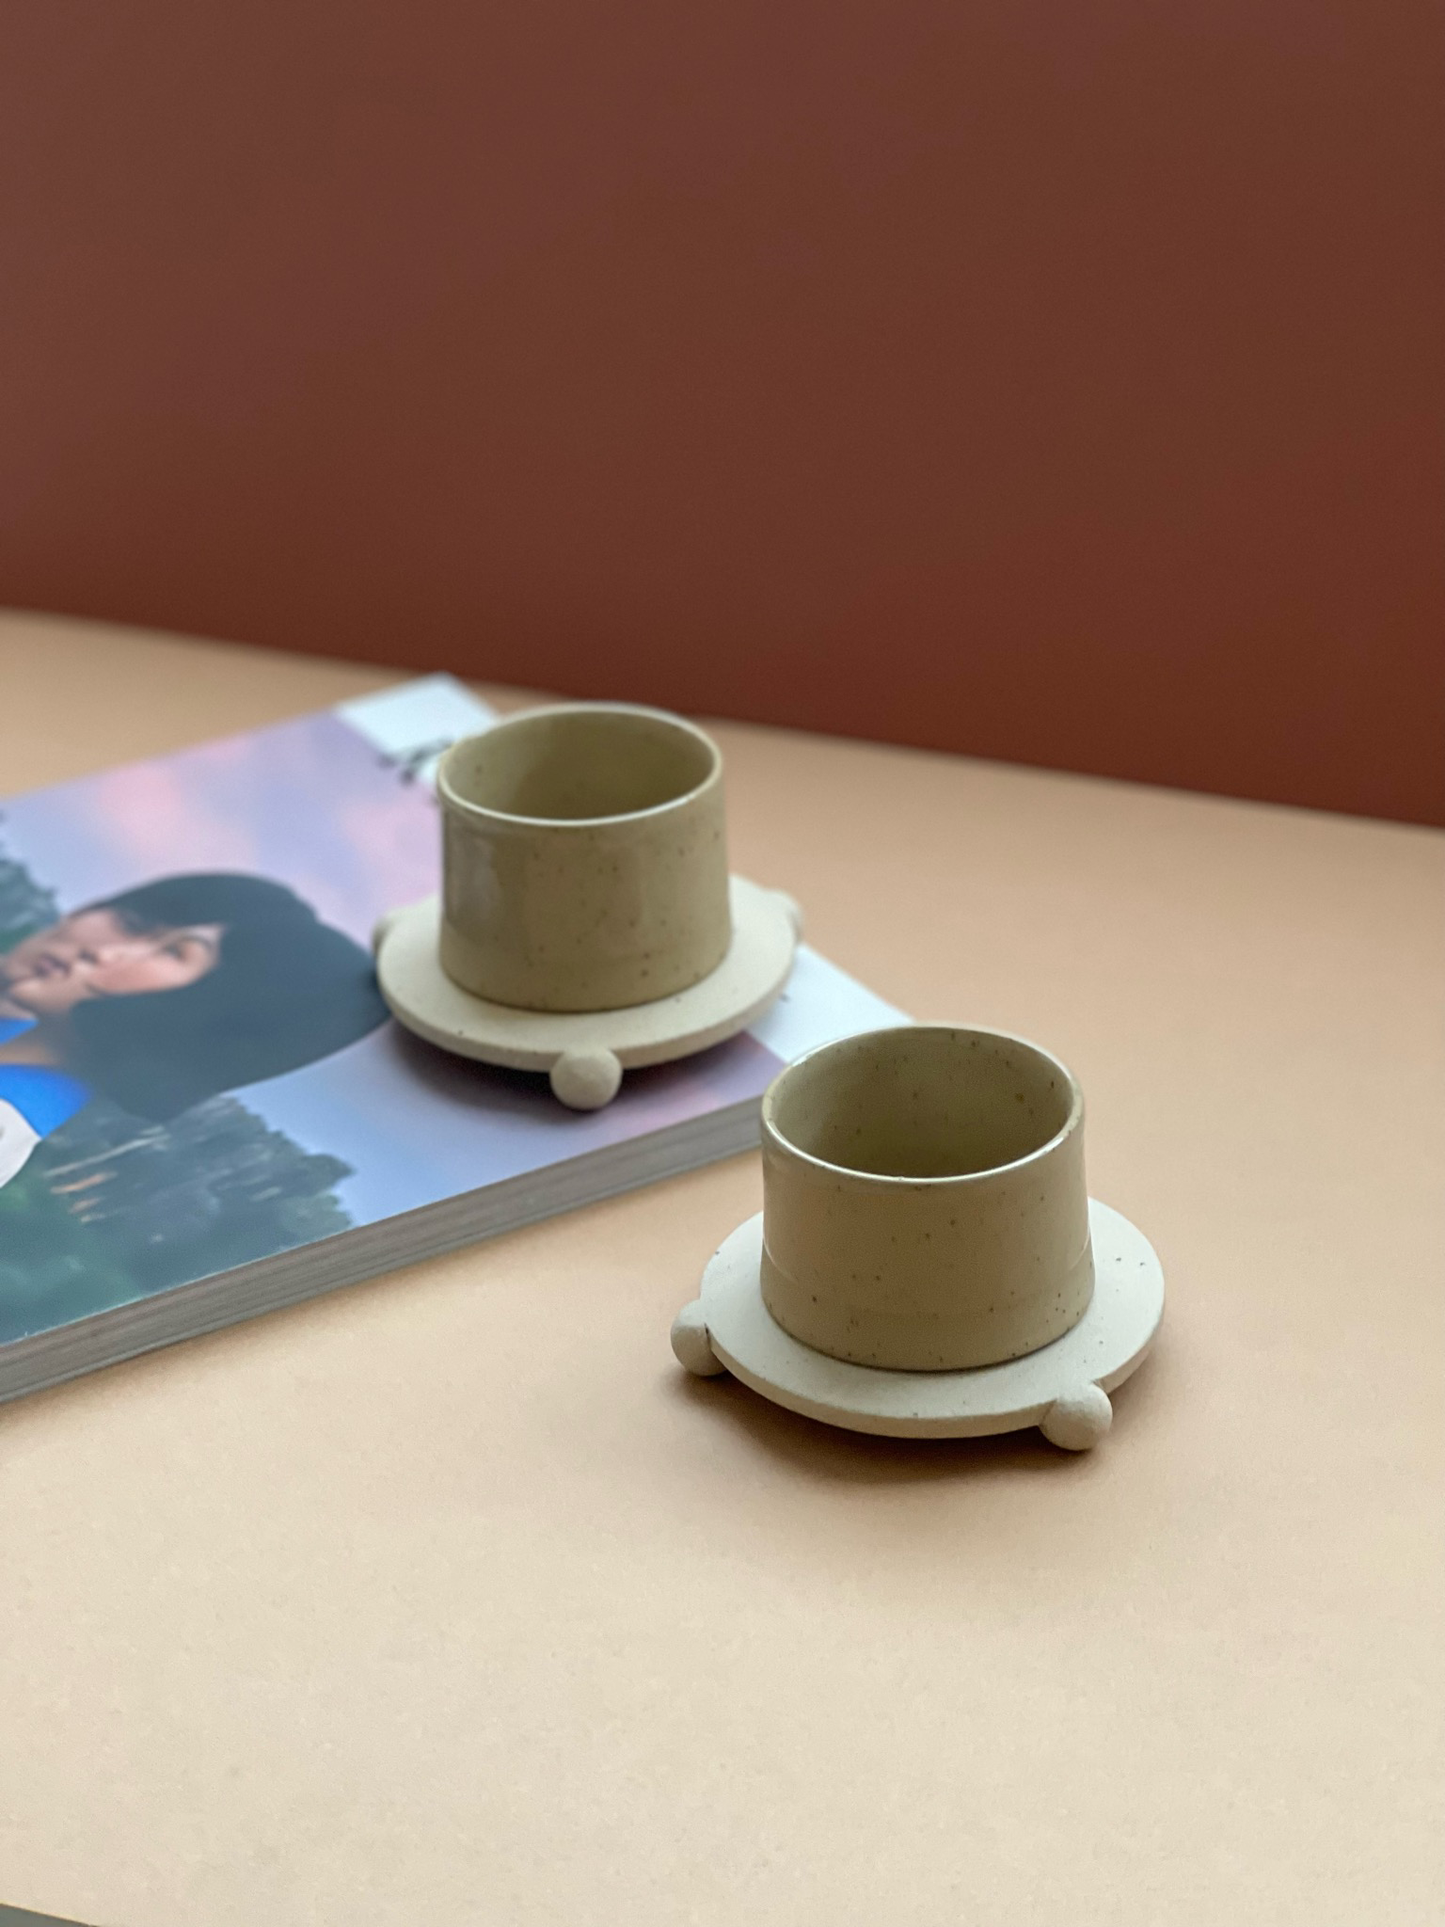 3 oz espresso cup with saucer